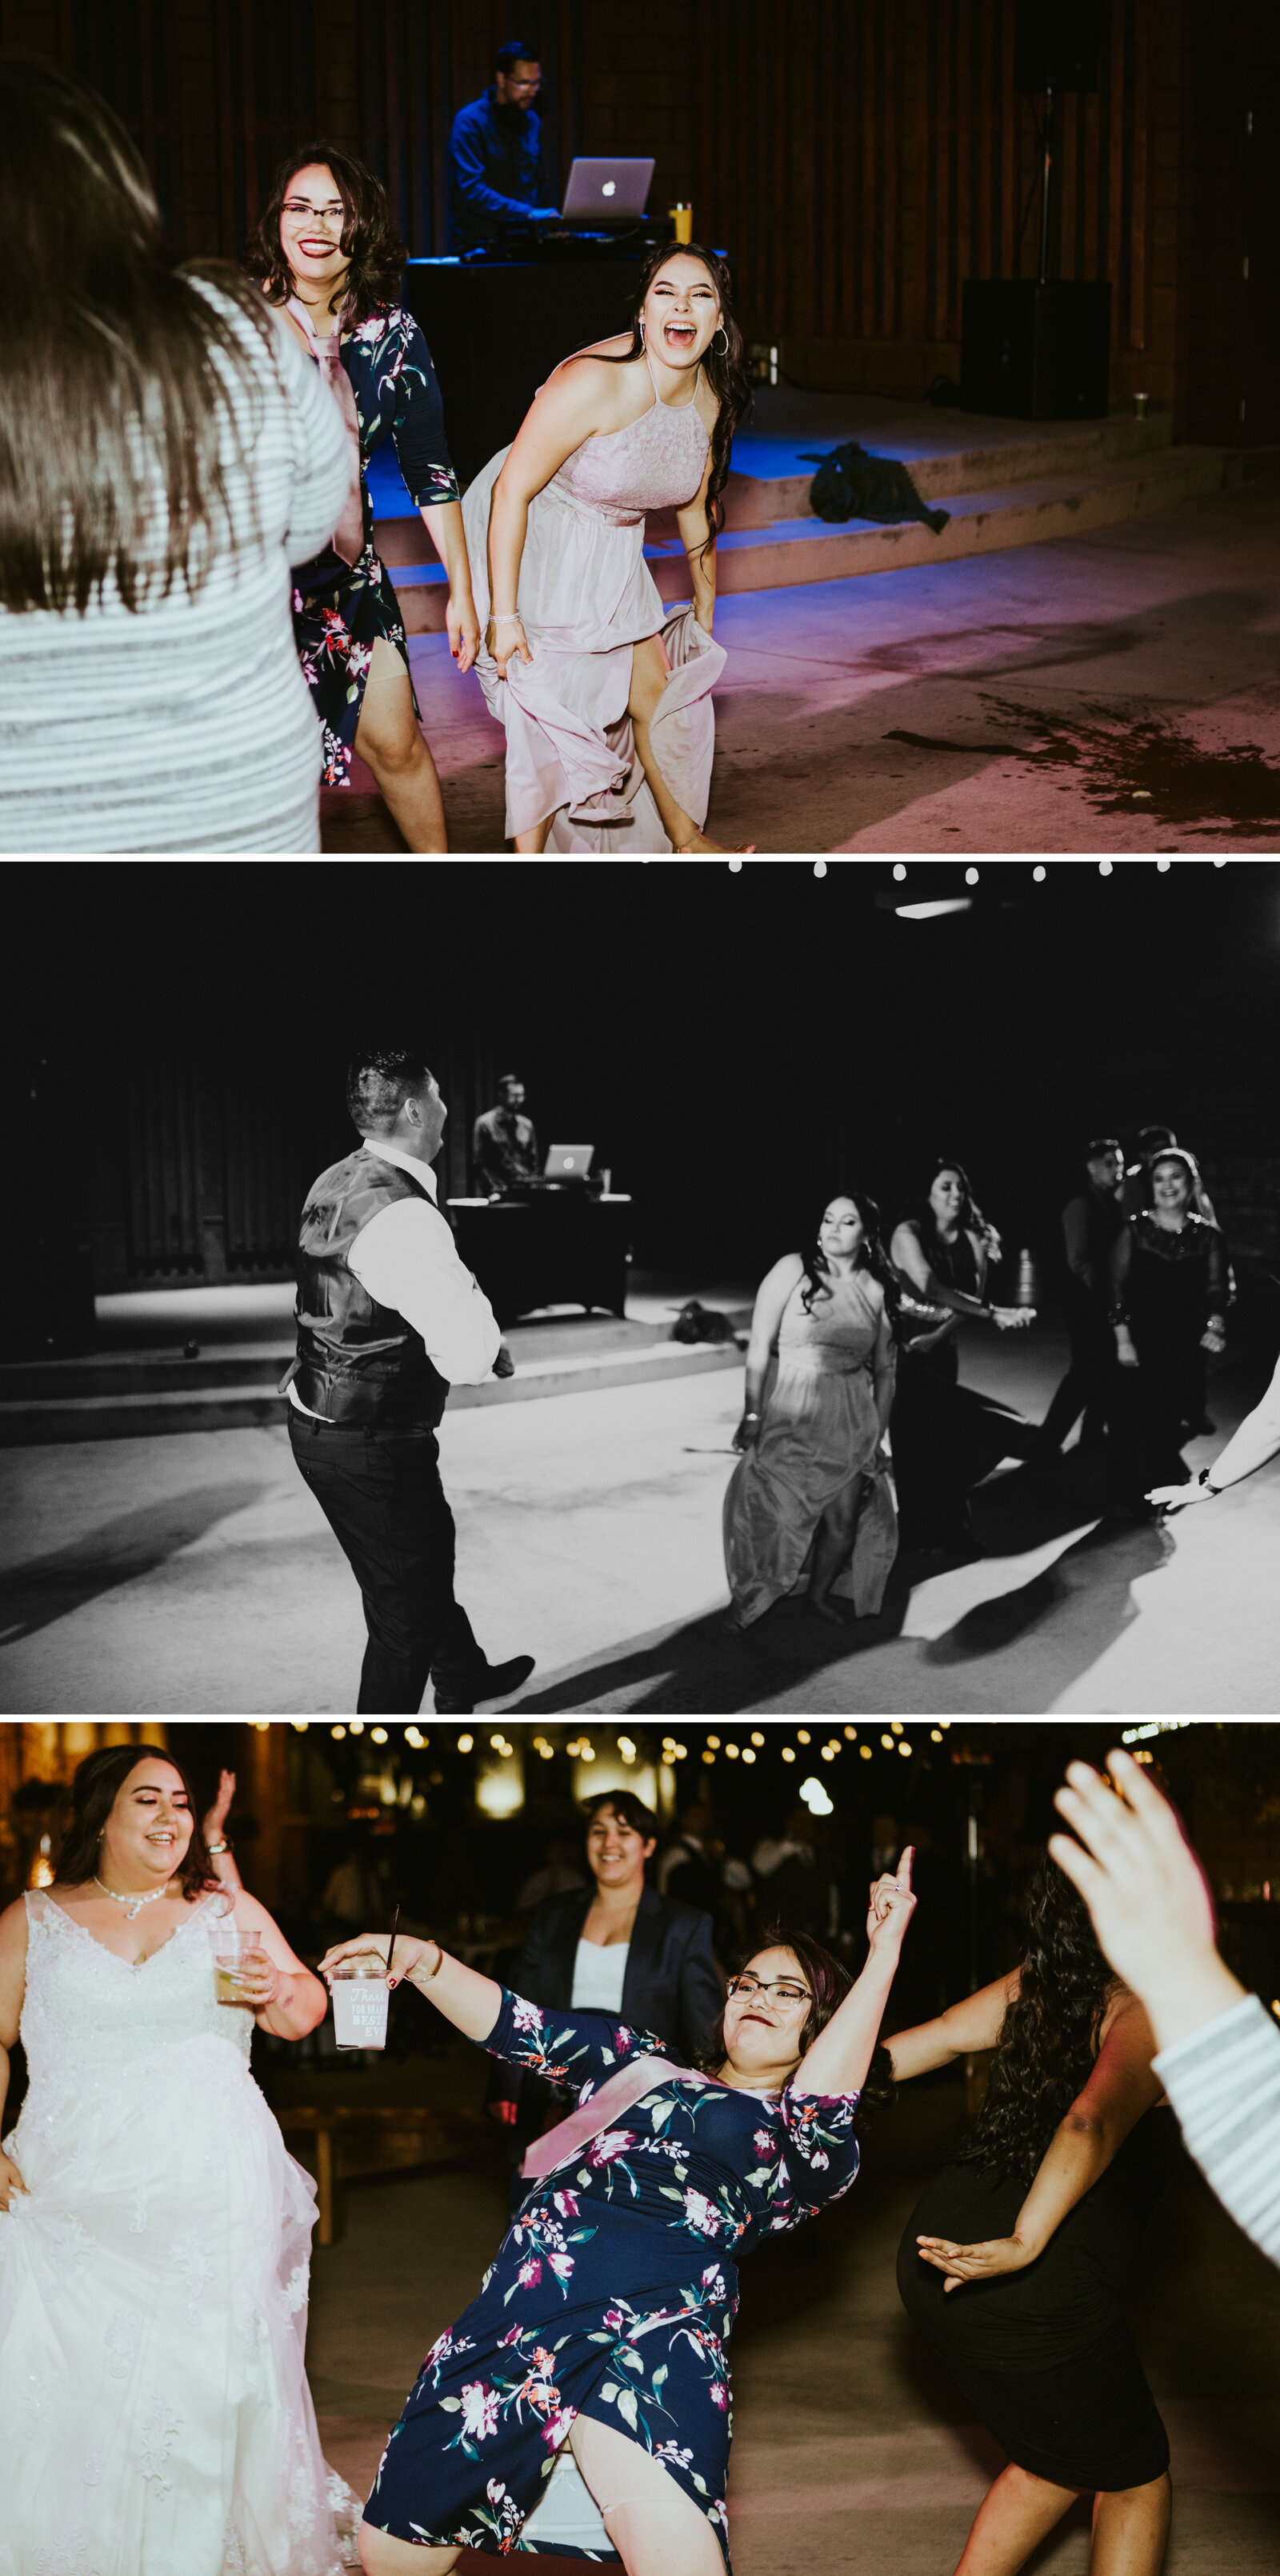 GRAND HIGHLAND HOTEL PRESCOTT ARIZONA WEDDING PHOTOGRAPHY RECEPTION PARTY DANCING.jpg